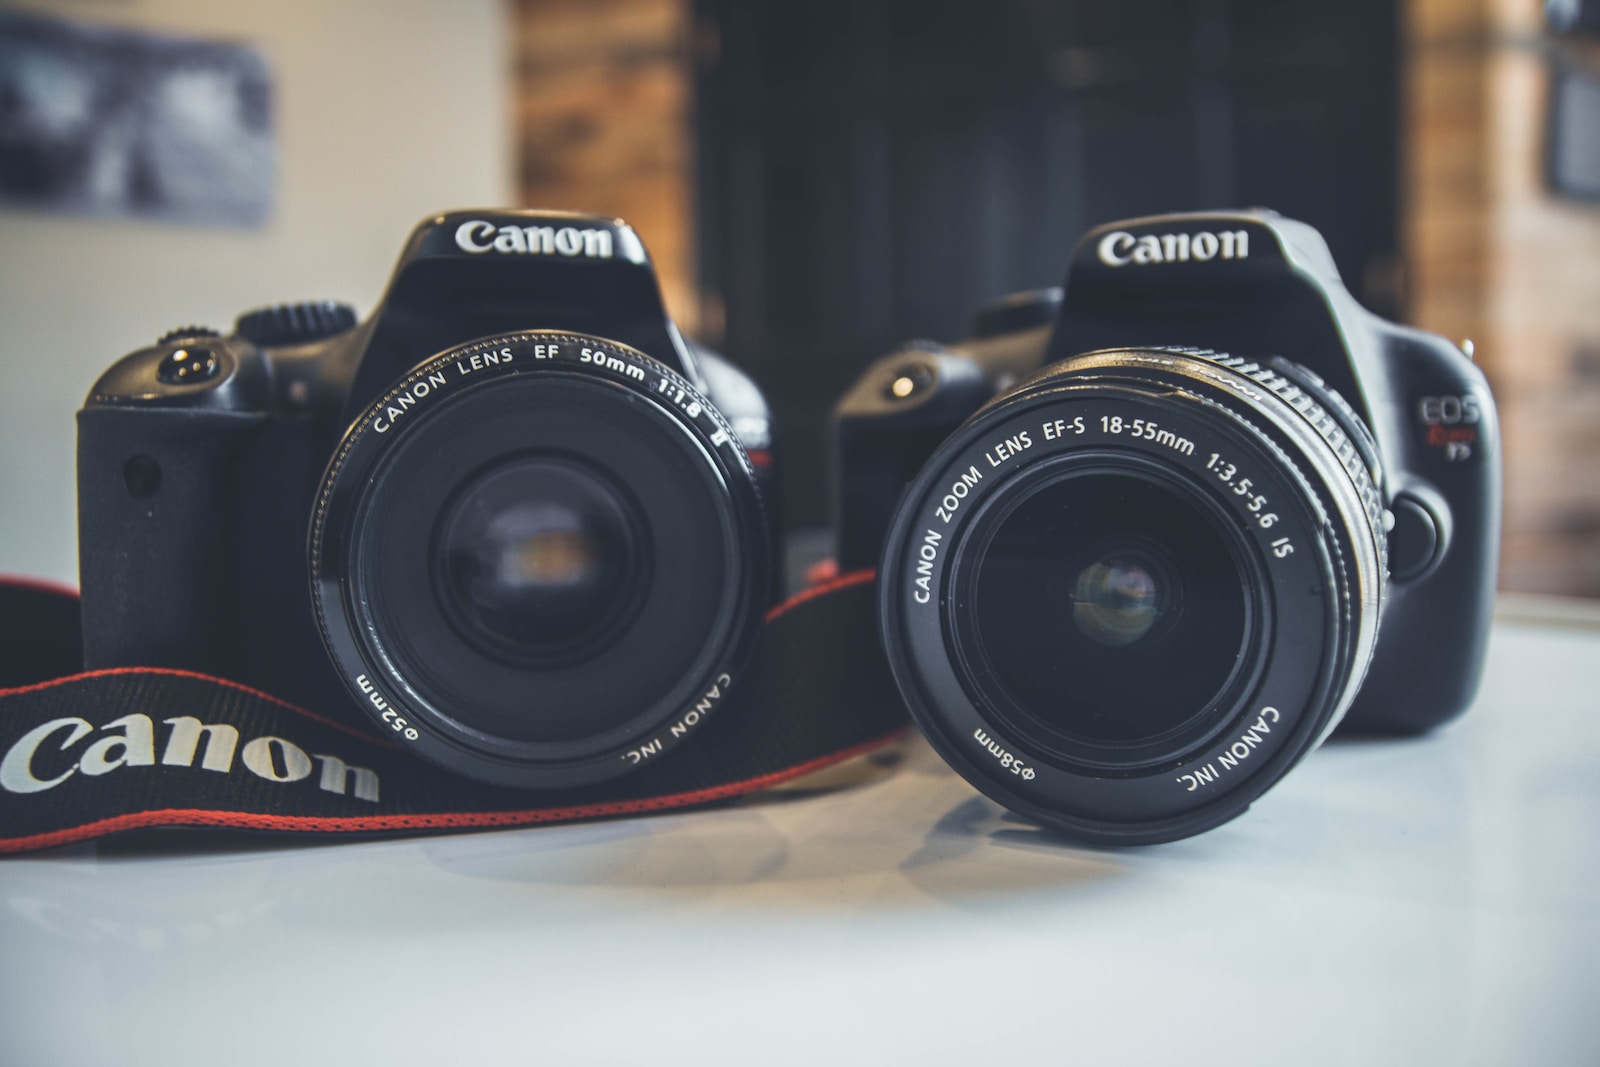 Prime Lens vs Zoom Lens two Canon DSLR cameras side by side